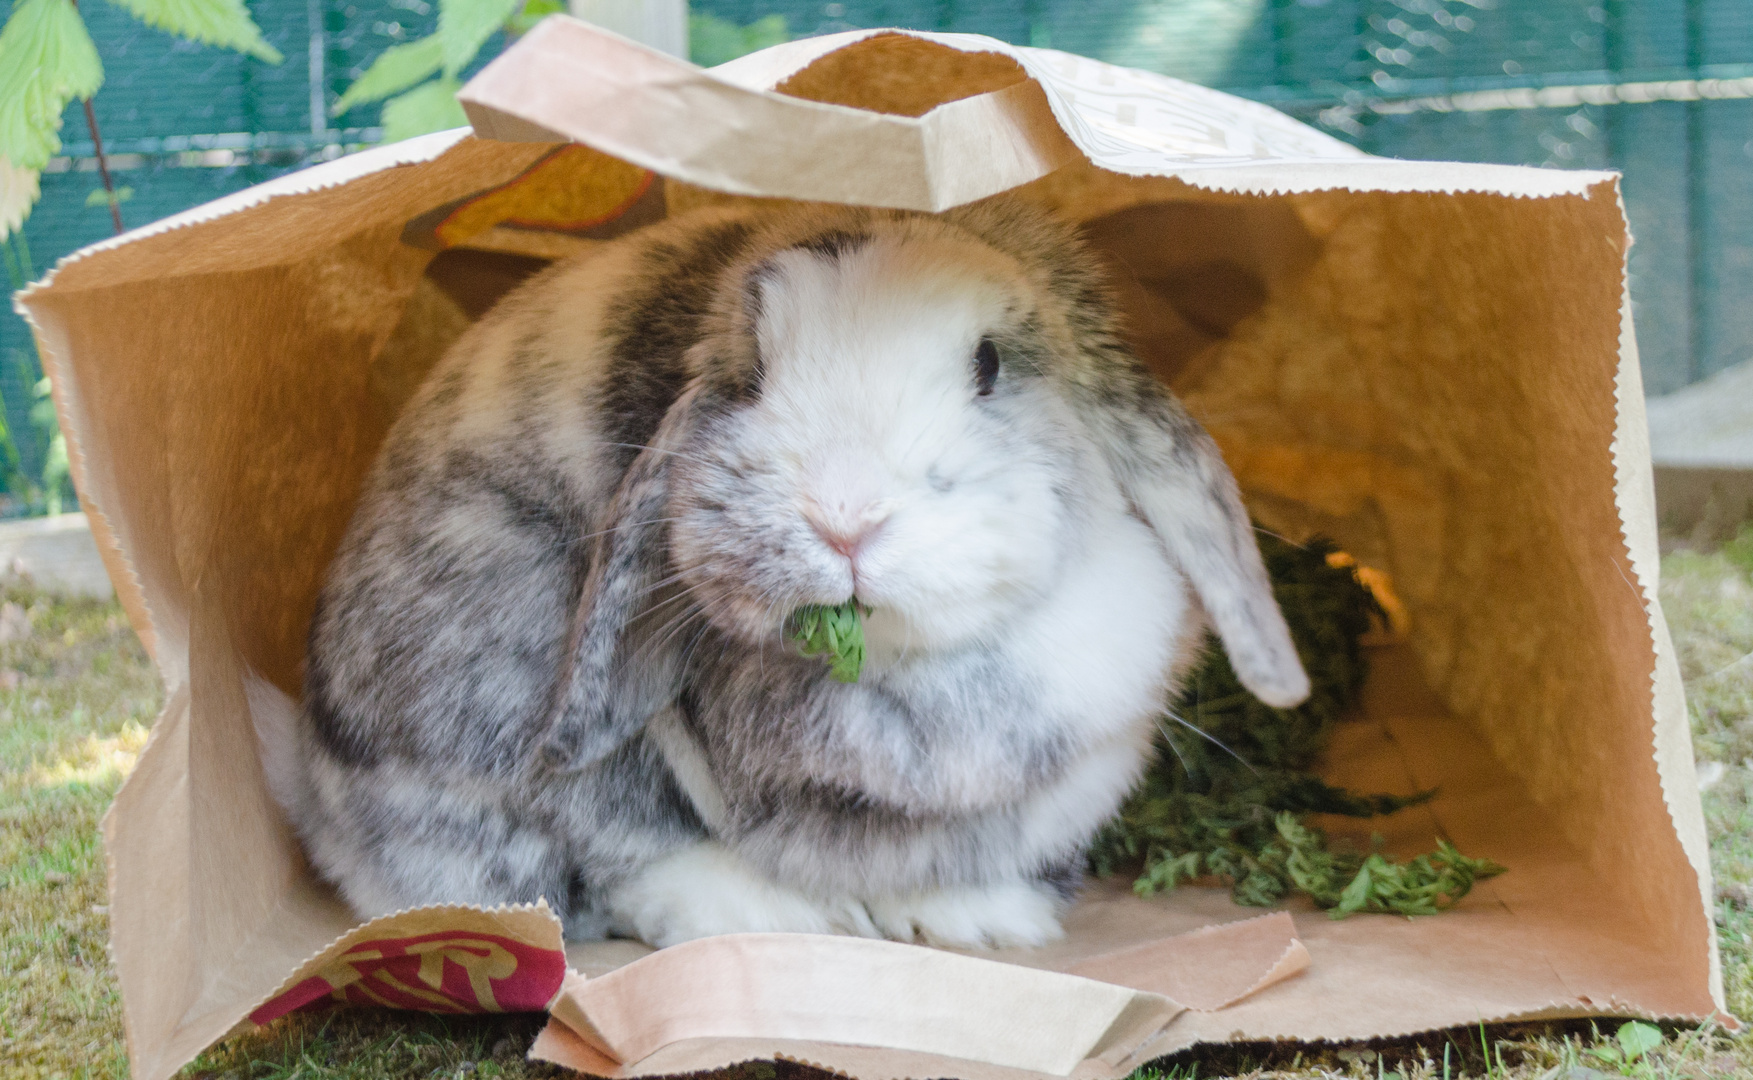 hiding my food - bunny yummy love